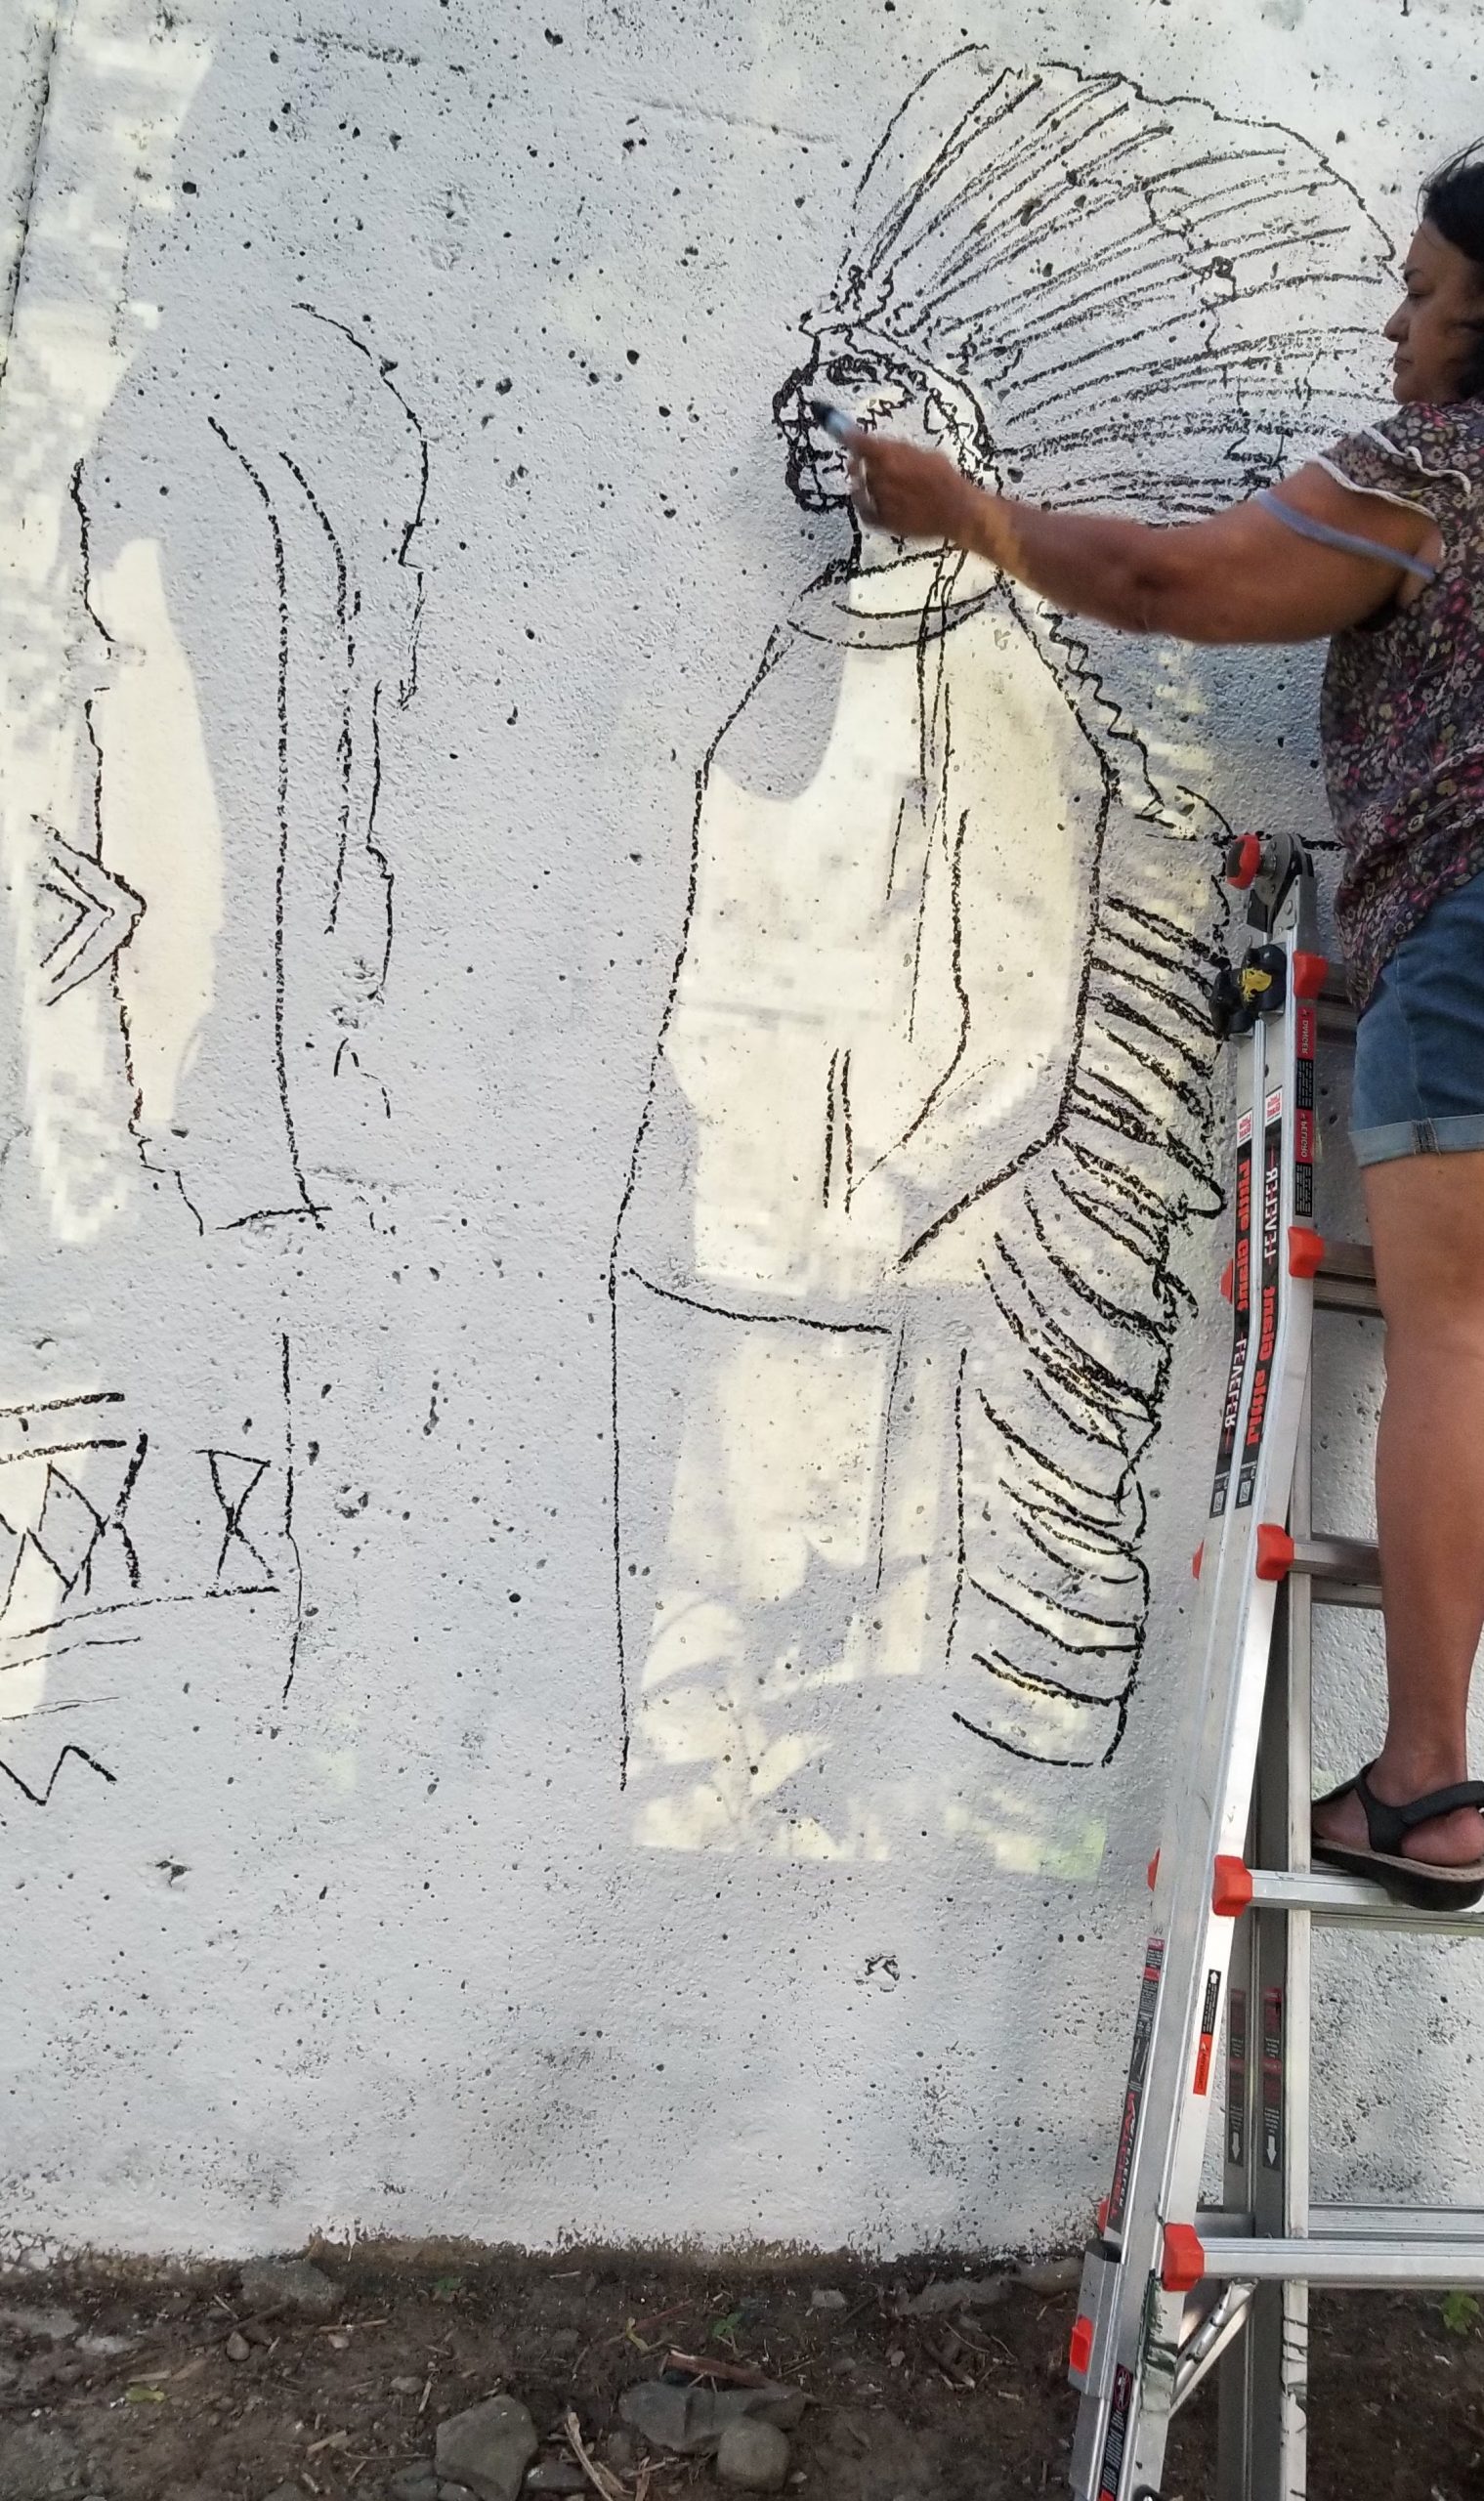 Cypress Street Land Acknowledgement Mural 2019  by Native American Wampanoag Artist  Deborah Spears Moorehead An  Outdoor Painted Mural on a Cement Bridge Wall  14 feet high by 30 feet wide